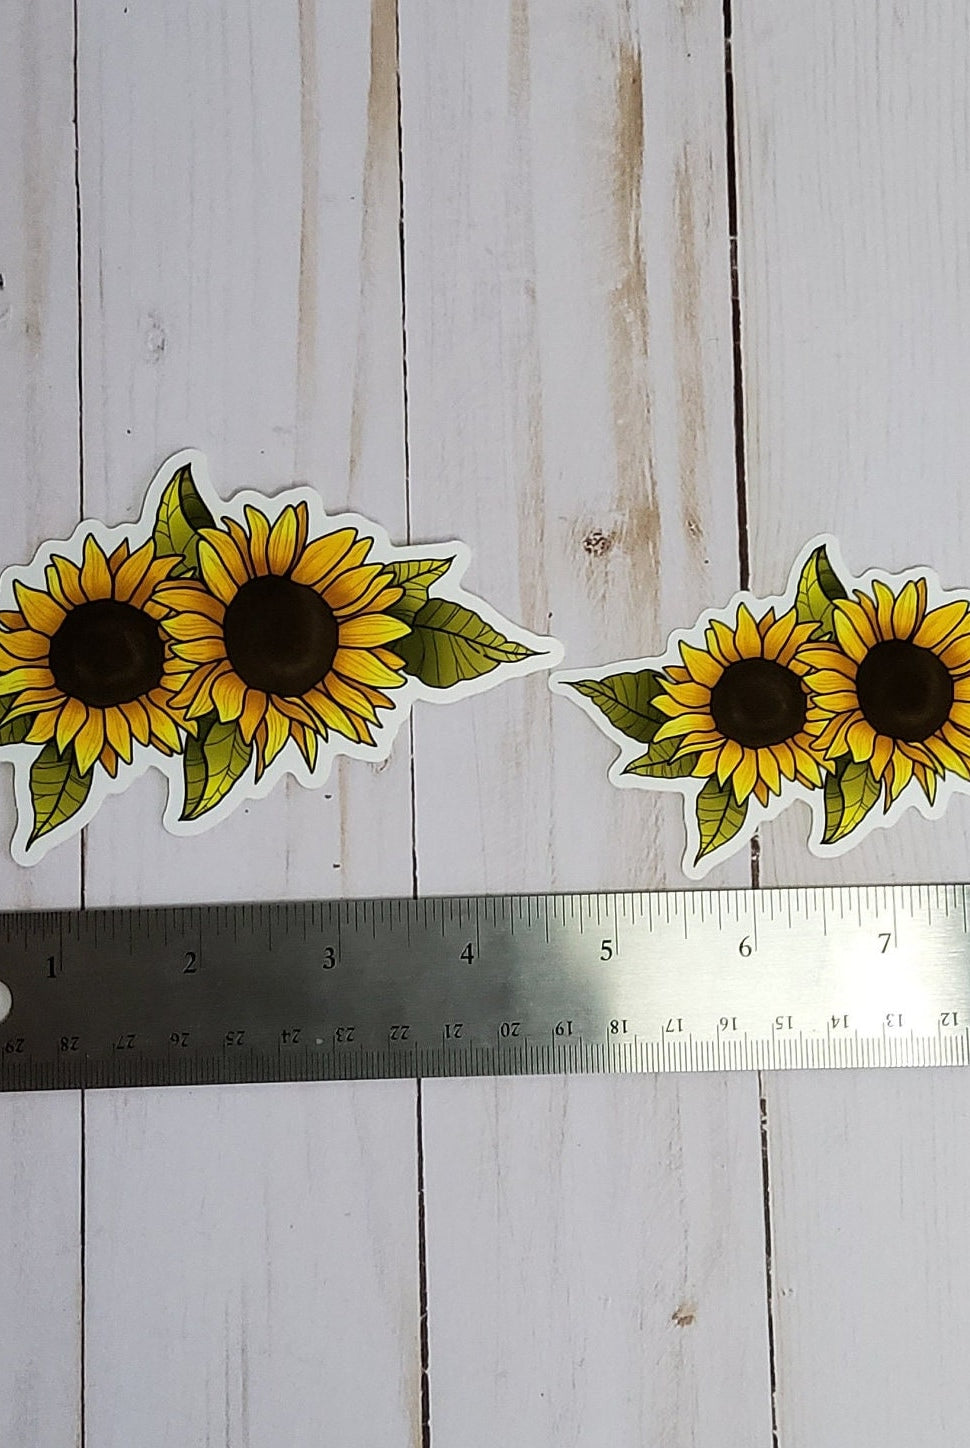 GLOSSY STICKER: Sunflower Botanical Illustration , Sunflower Sticker , Yellow and Gold Sunflower Sticker , Sunflower Vibes , Sunflowers